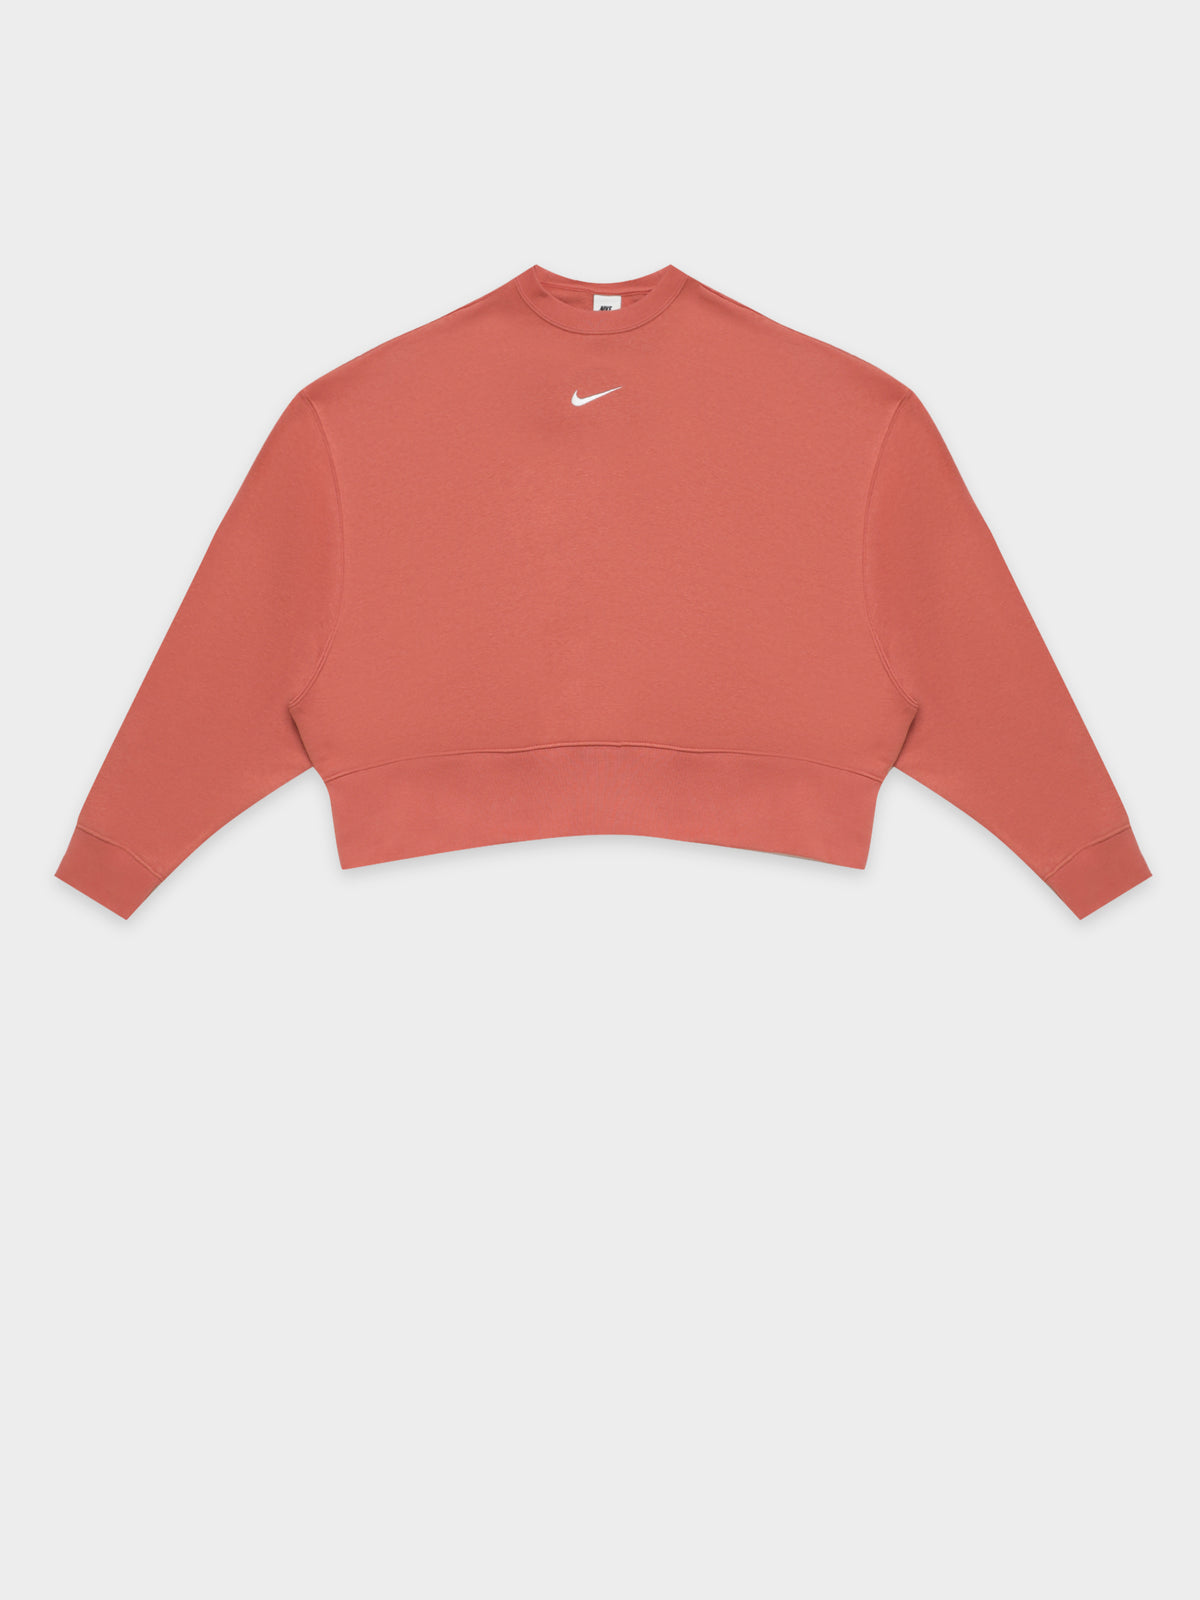 Sportswear Essential Collection Fleece Oversized Crew Sweatshirt in Madder Root Red